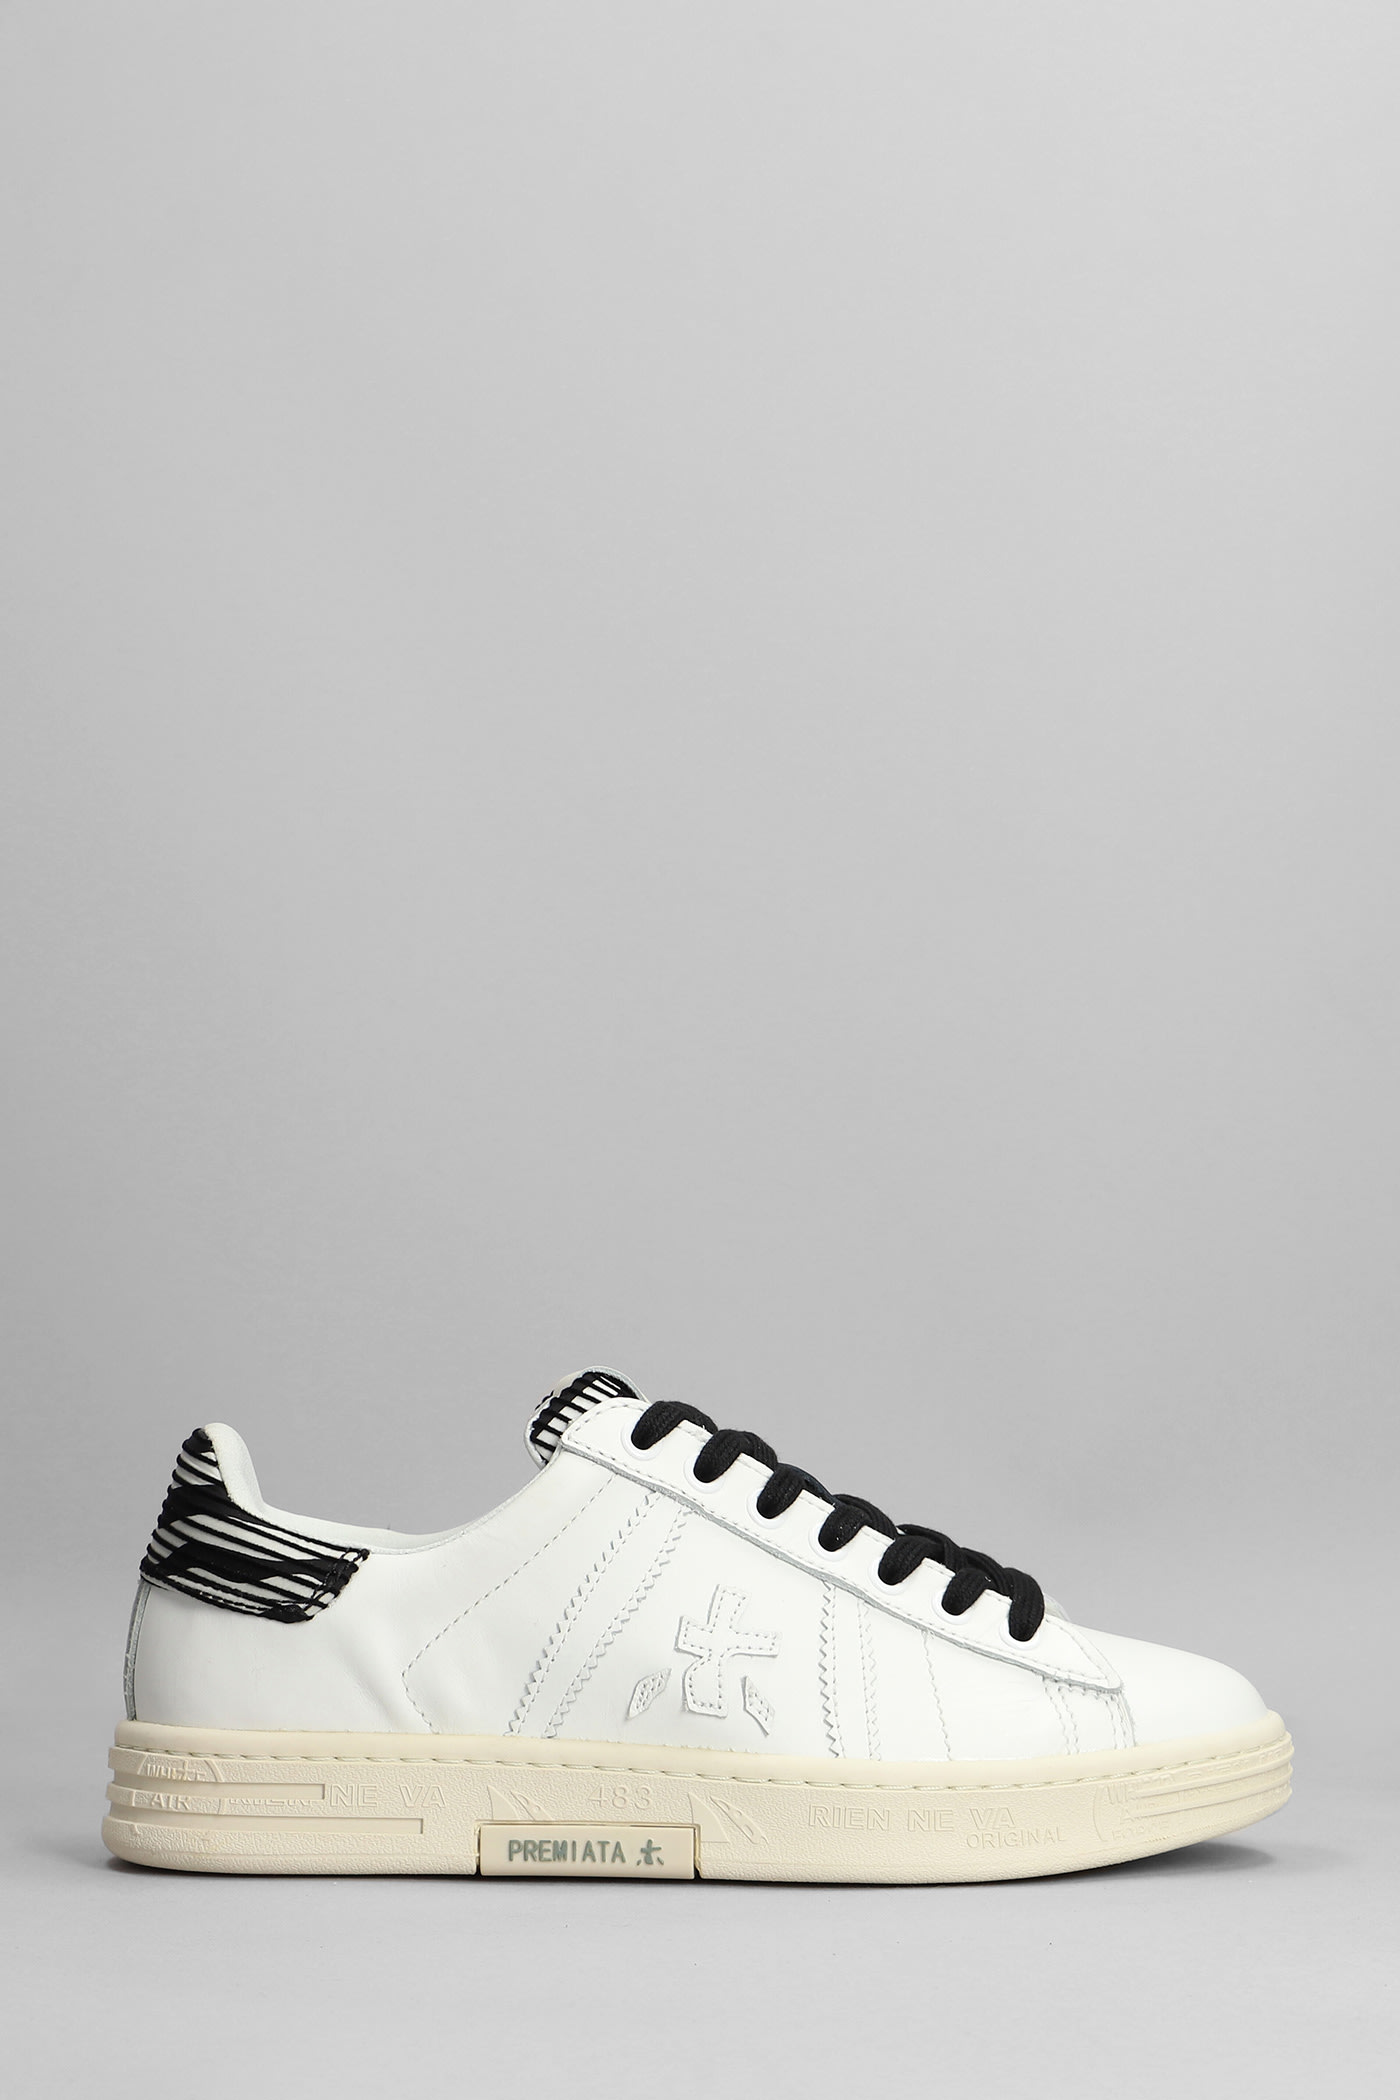 Premiata Russel Sneakers In White Leather